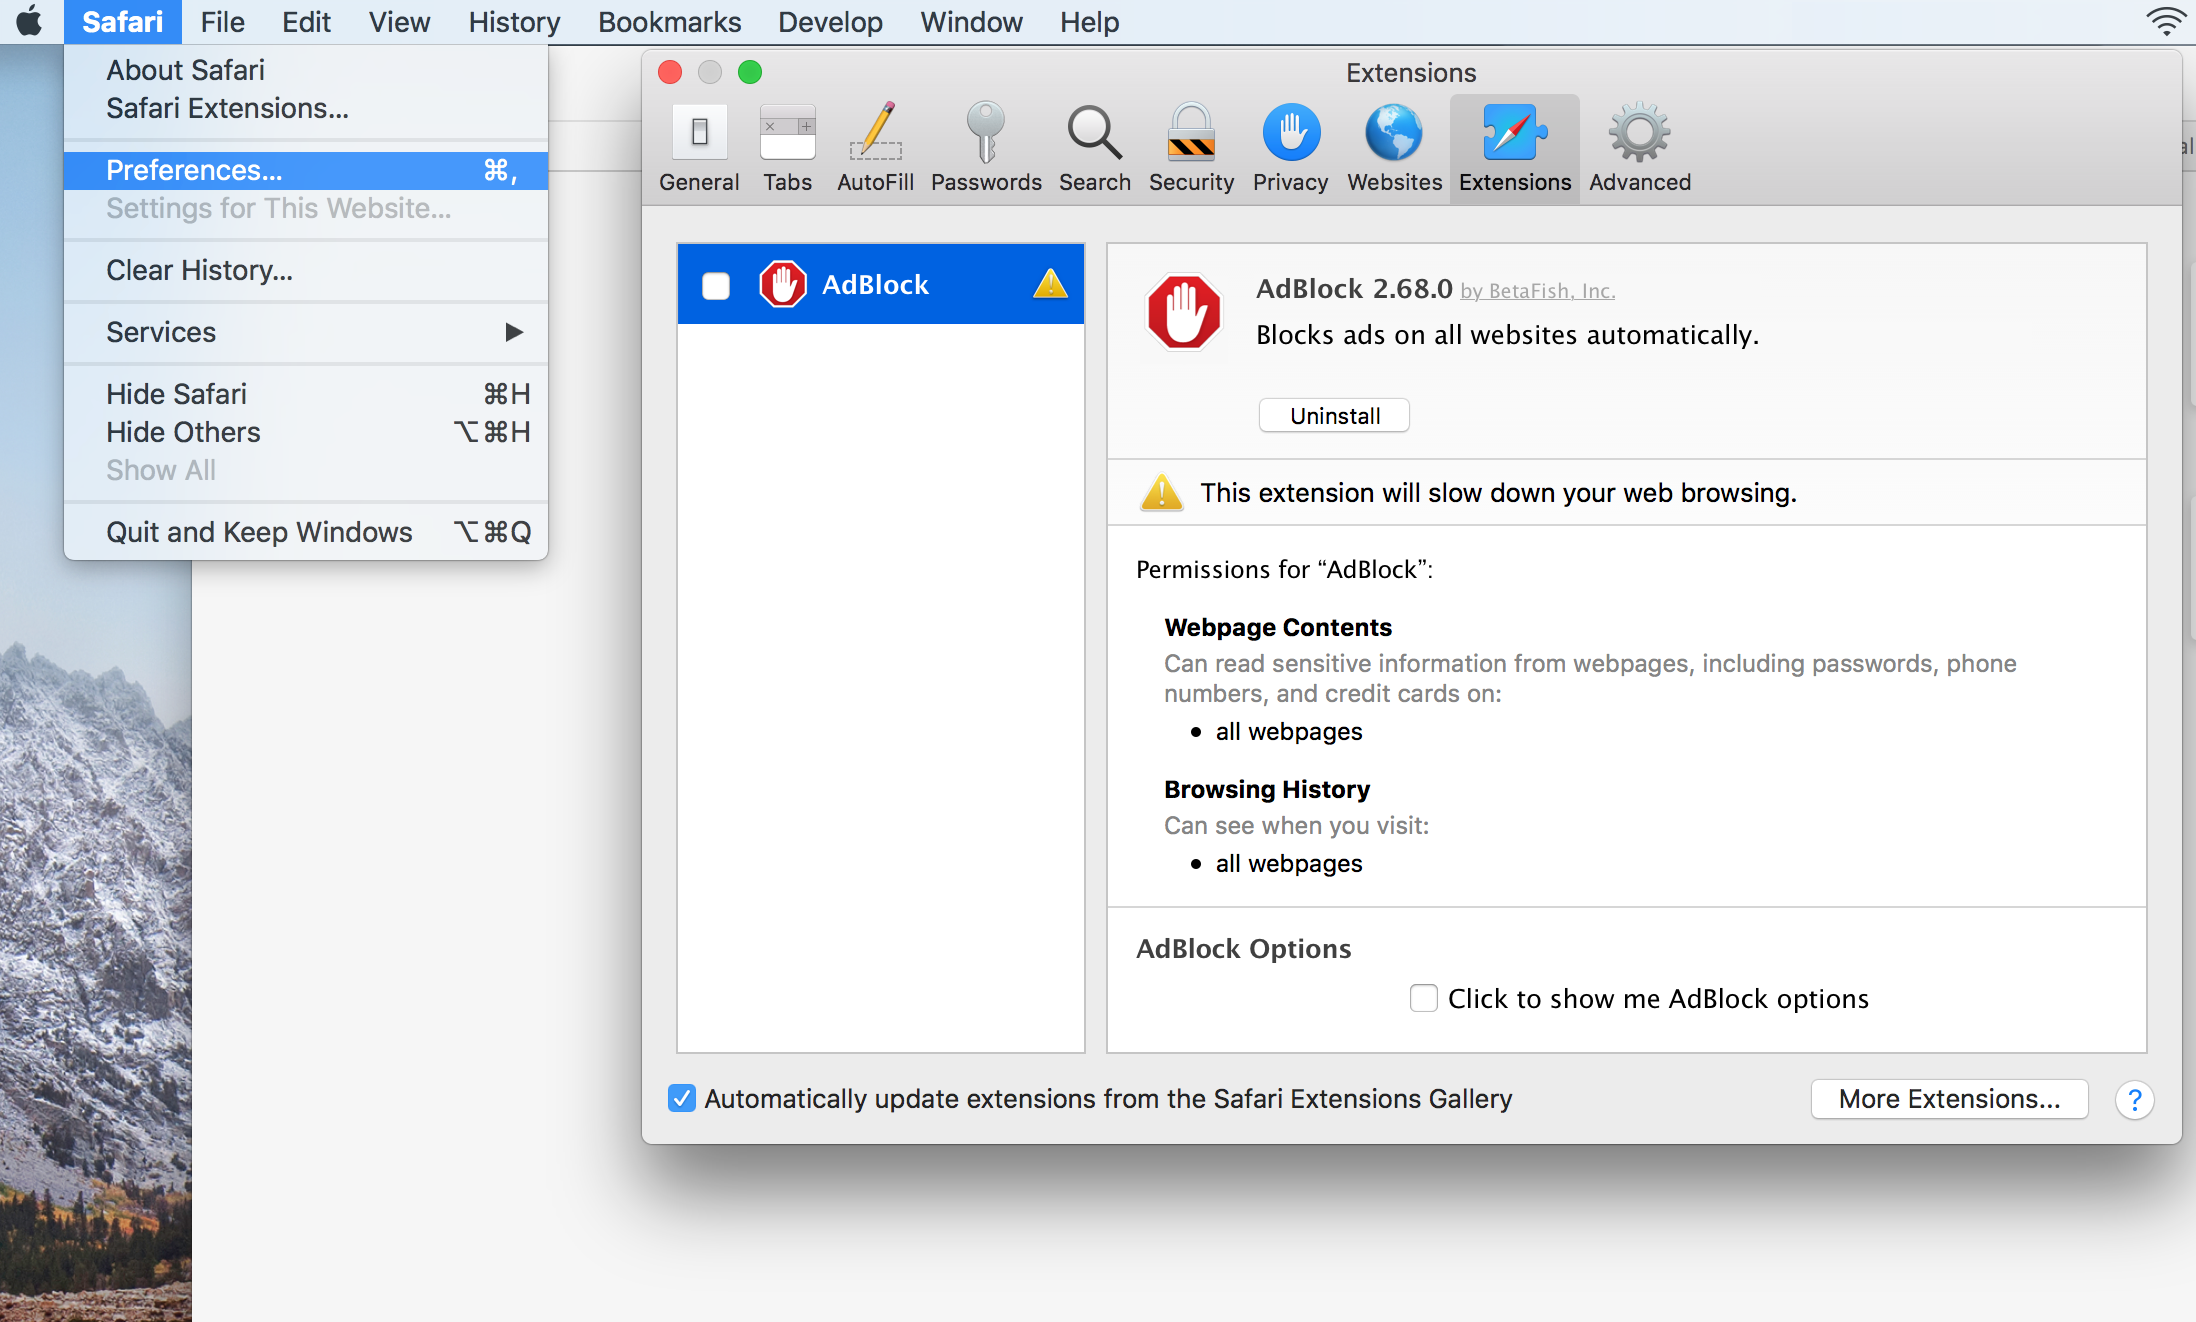 how to disable pop up blocker safari on mac